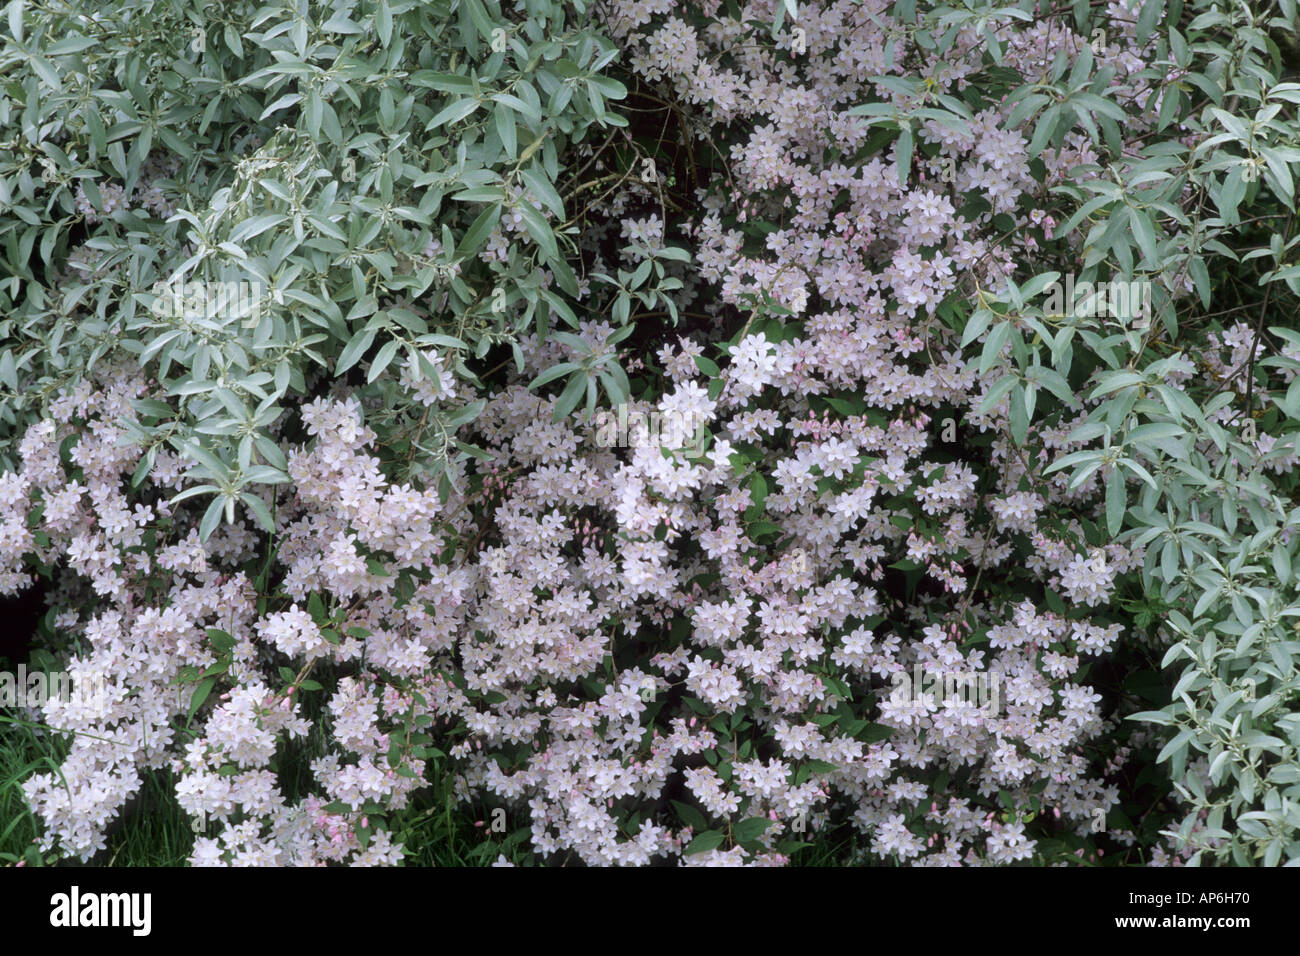 Eleagnus 'Quicksilver' & Exochorda x macrantha 'The Bride', pink white flowers, silver grey foliage, garden plants Stock Photo